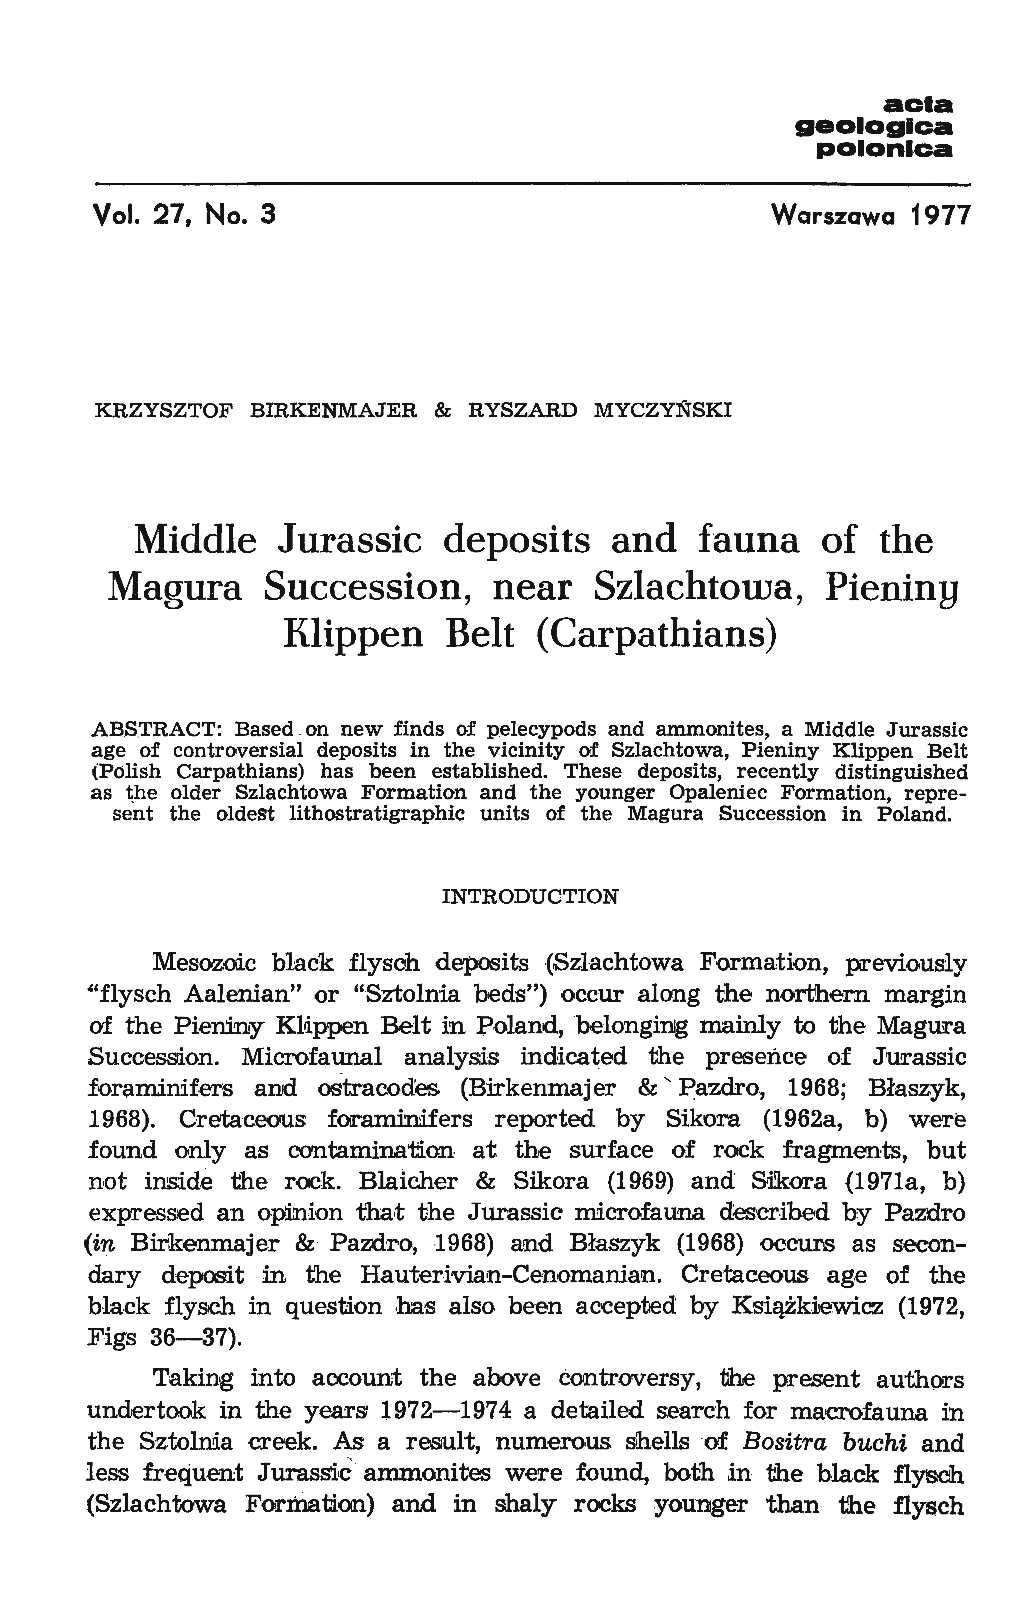 Middle Jurassic Deposits and Fauna of the Magura Succession, Near Szlachtowa, Pieniny Klippen Belt (Carpathians)